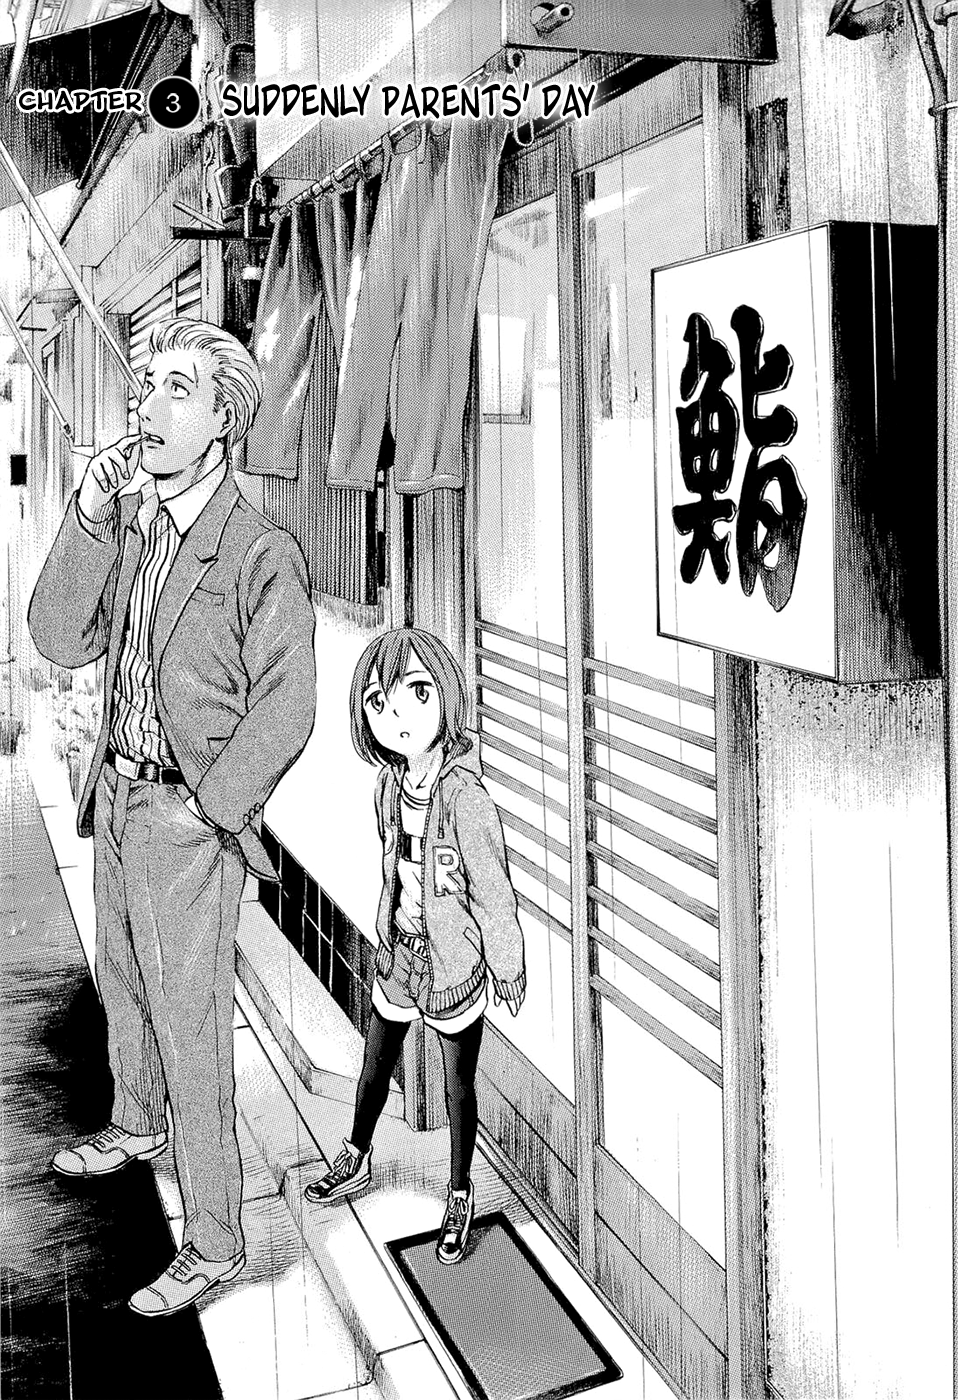 Hinamatsuri Vol.1-Chapter.3-Suddenly-Parents'-Day Image